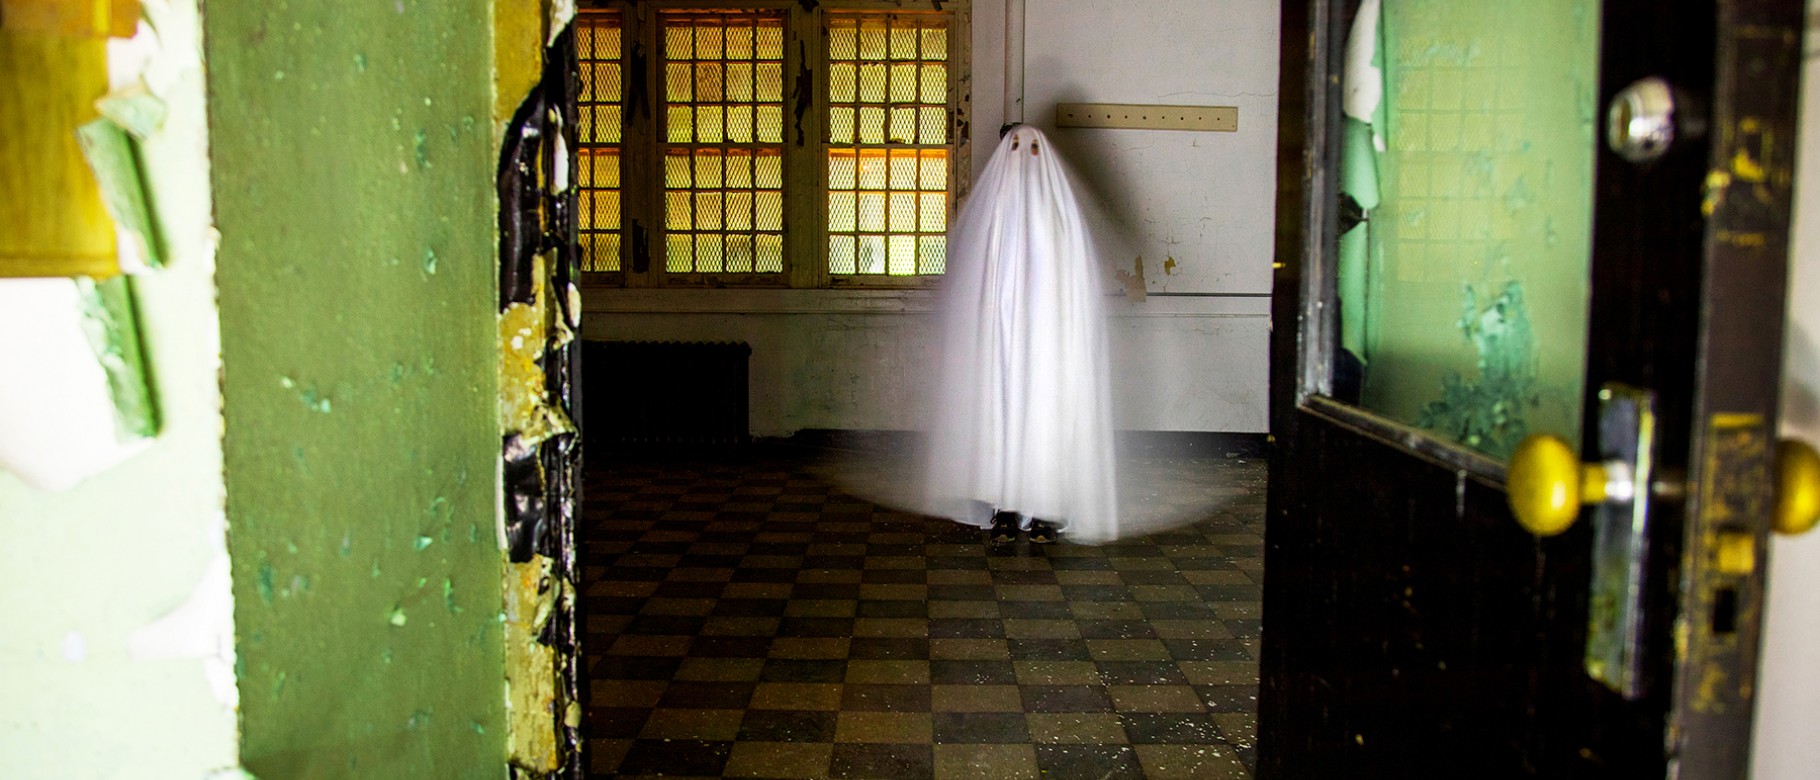 Digital art piece showing white ghost inside empty room